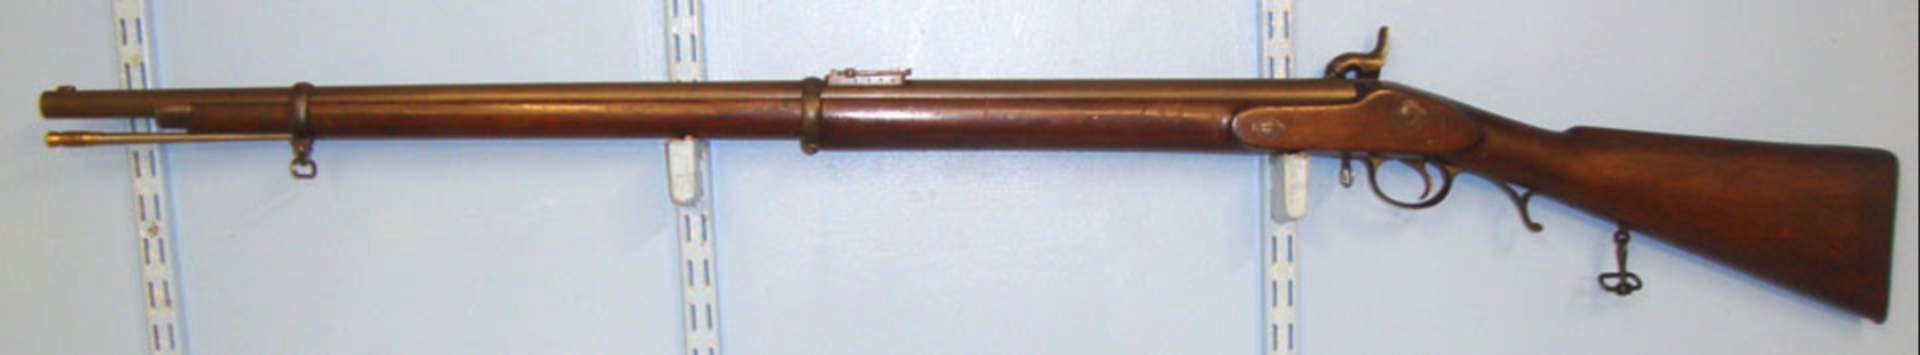 VERY RARE, British Victorian Charles Lancaster's 1850 Patent Regulation Percussion Rifle - Image 2 of 3